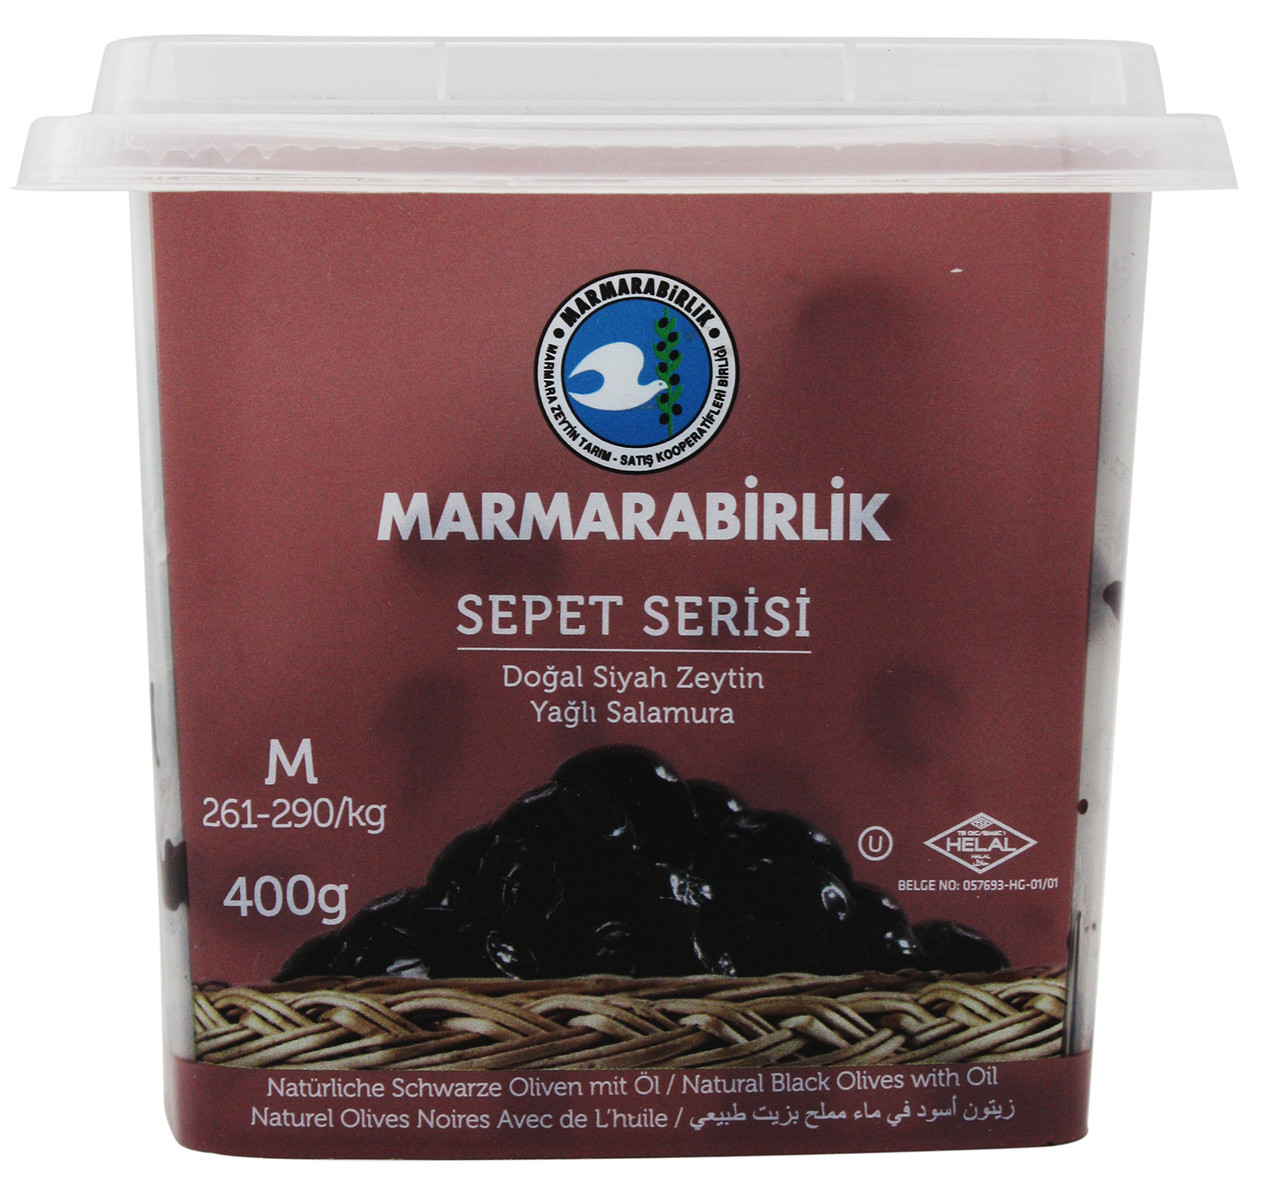 Маслины Marmarabirlik sepet serisi вяленые M, 400 гр.(Турция)